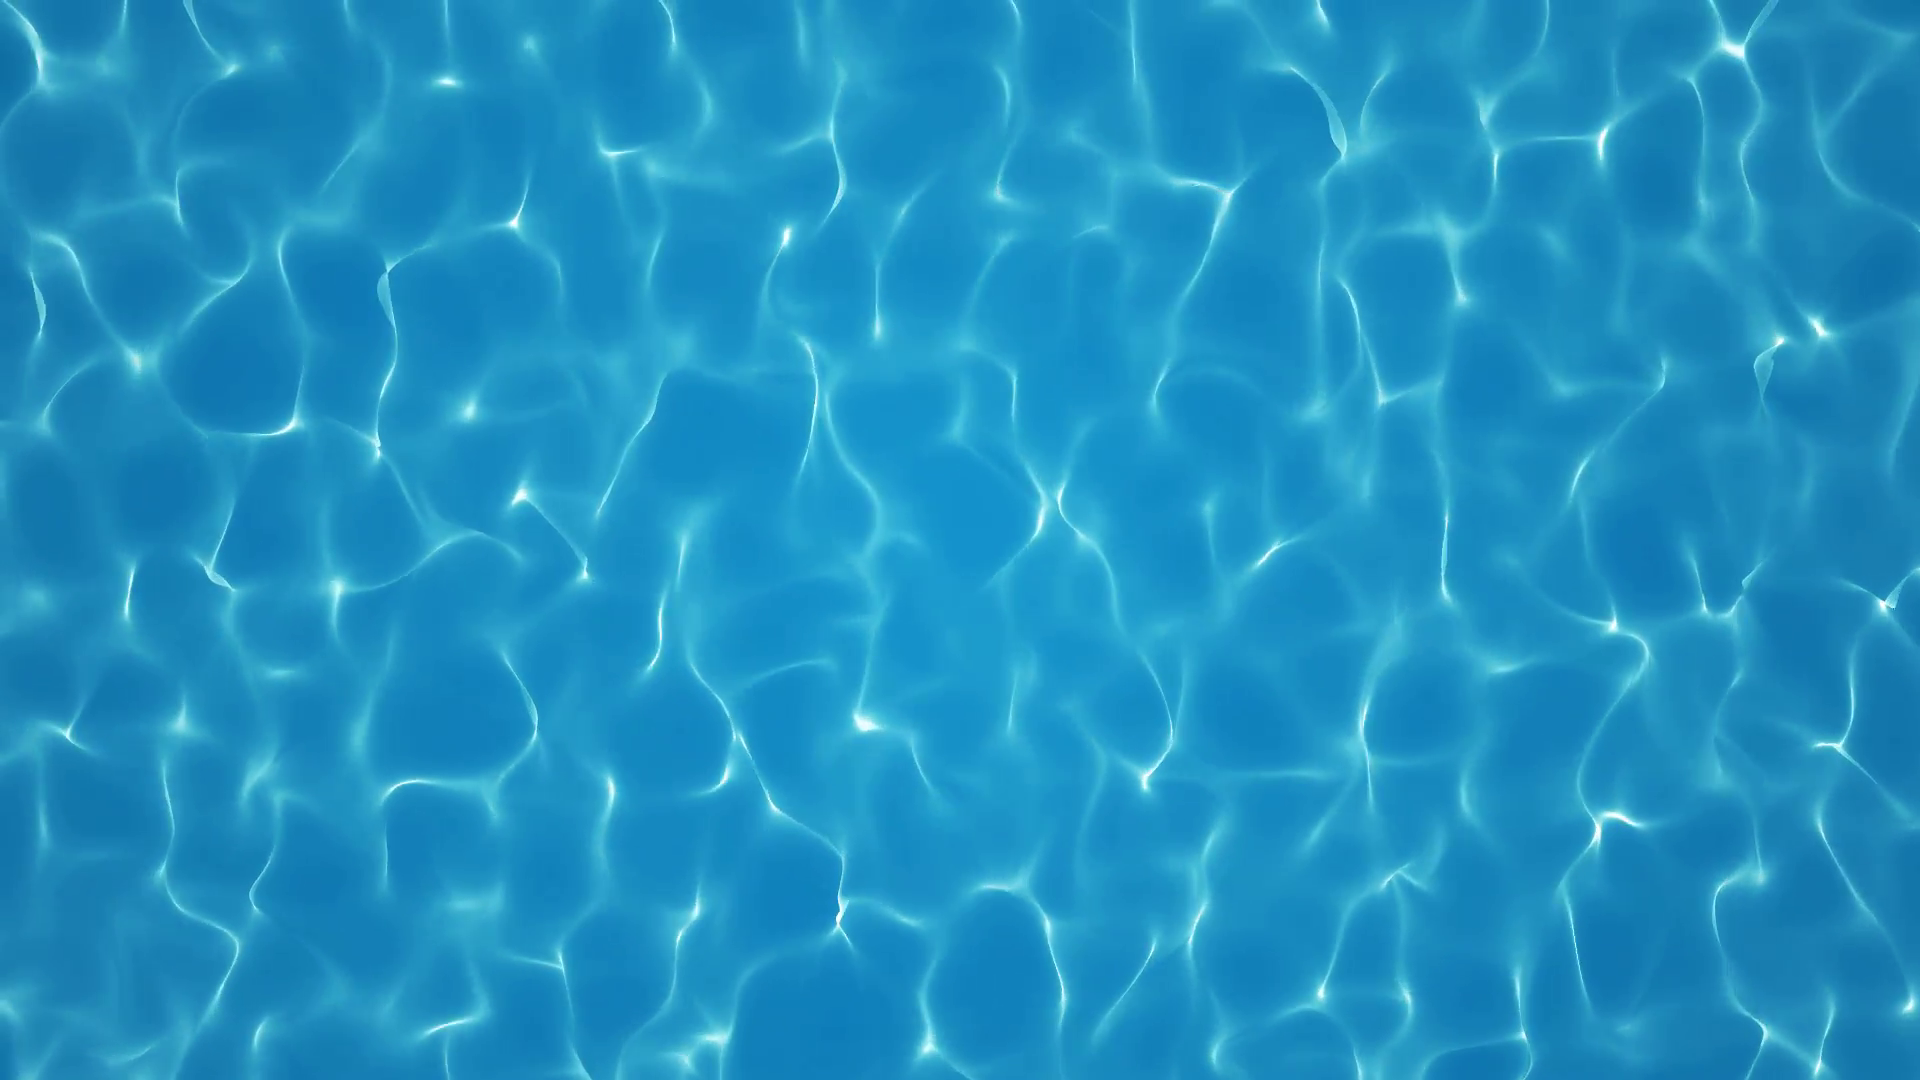 Free photo: Water surface - Blue, Forms, Lake - Free Download - Jooinn